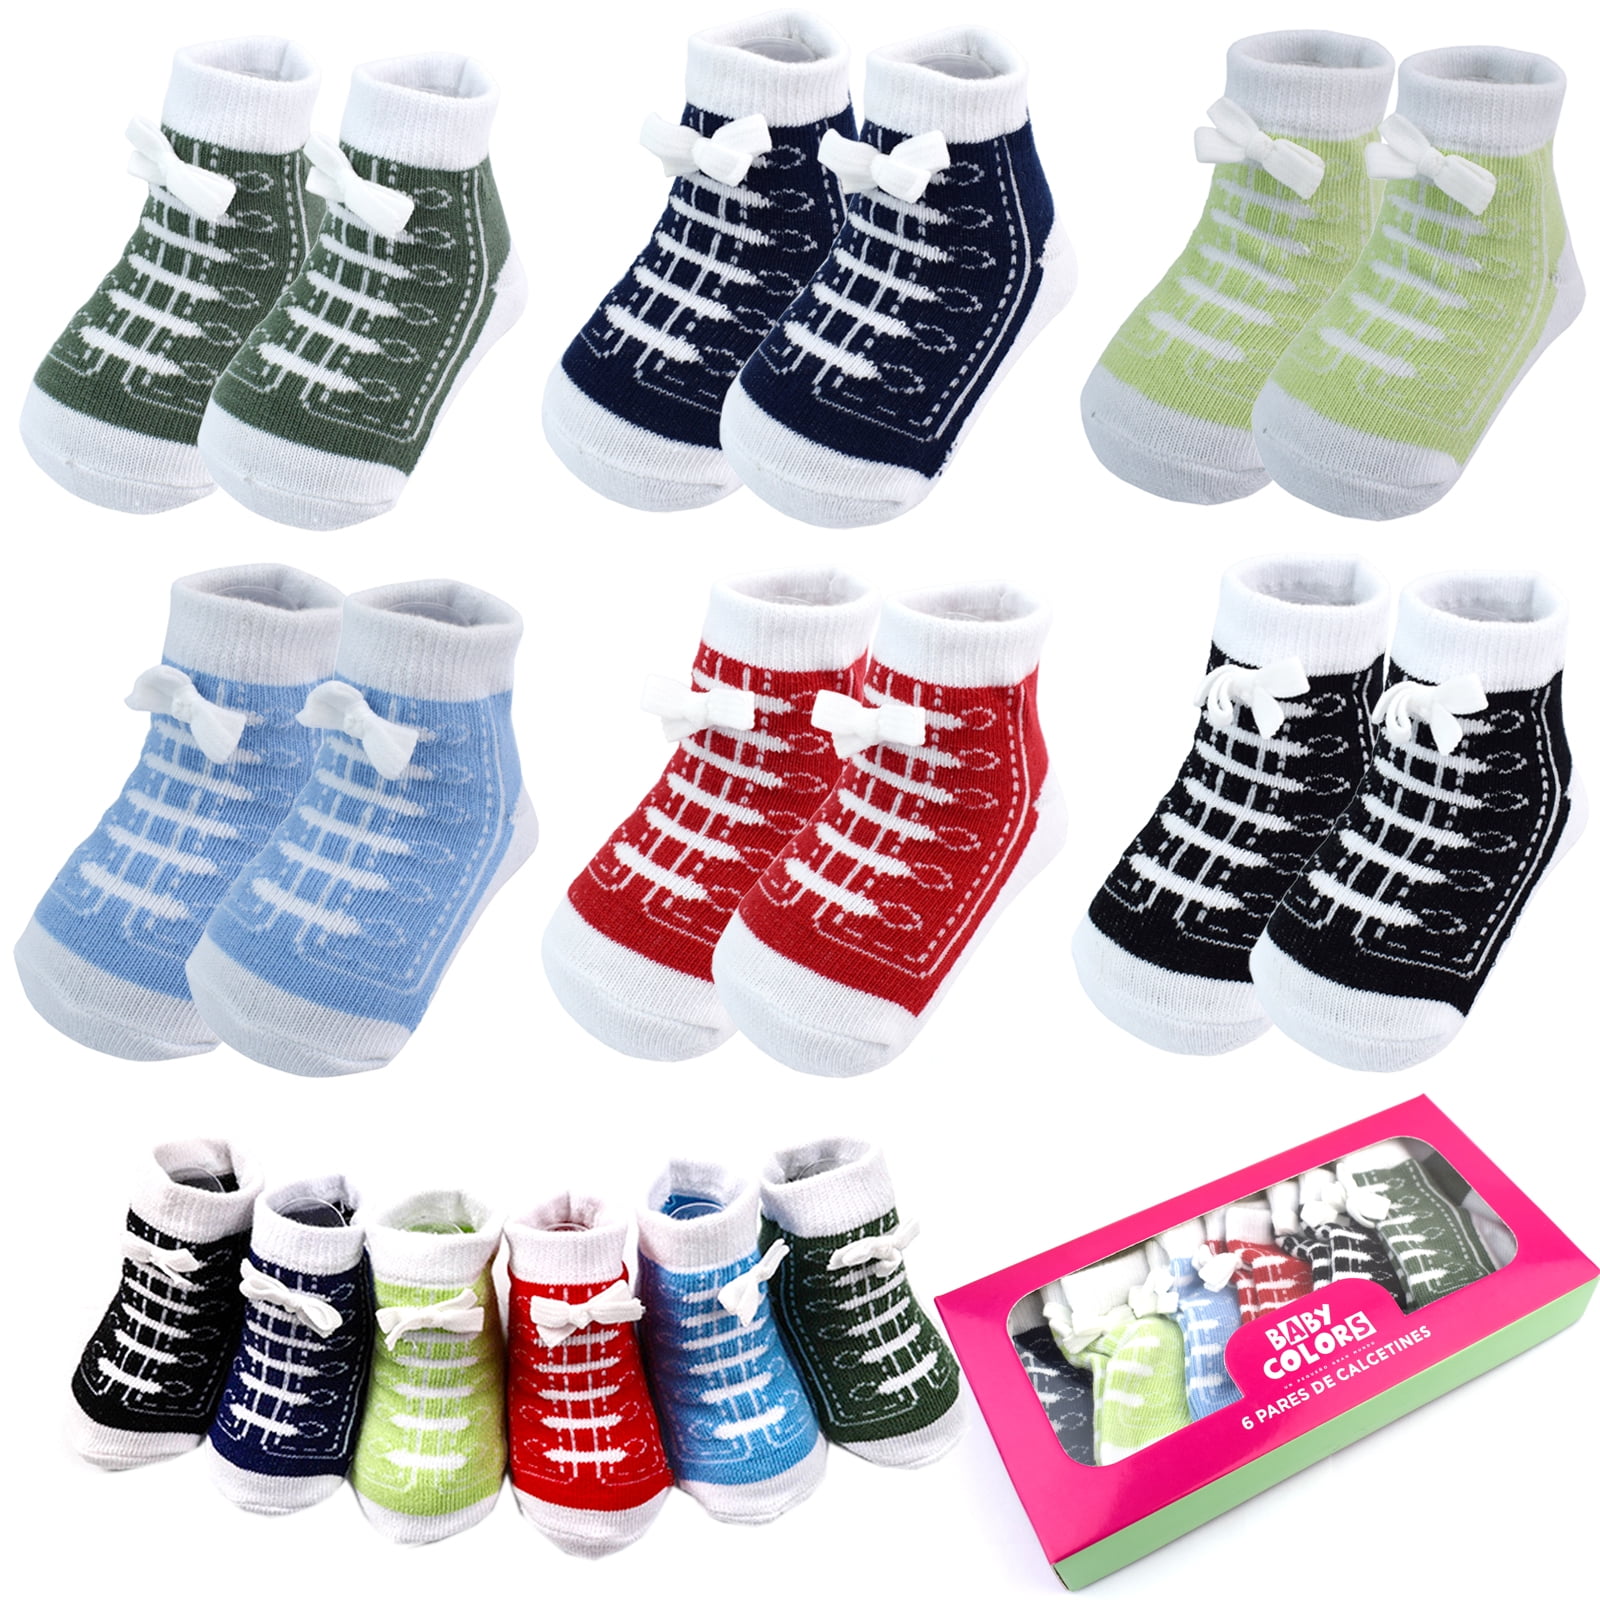 7 Days 7 Pairs of Baby Boys Girl Socks Gift Box for Newborns 0-6 Months Mixed 